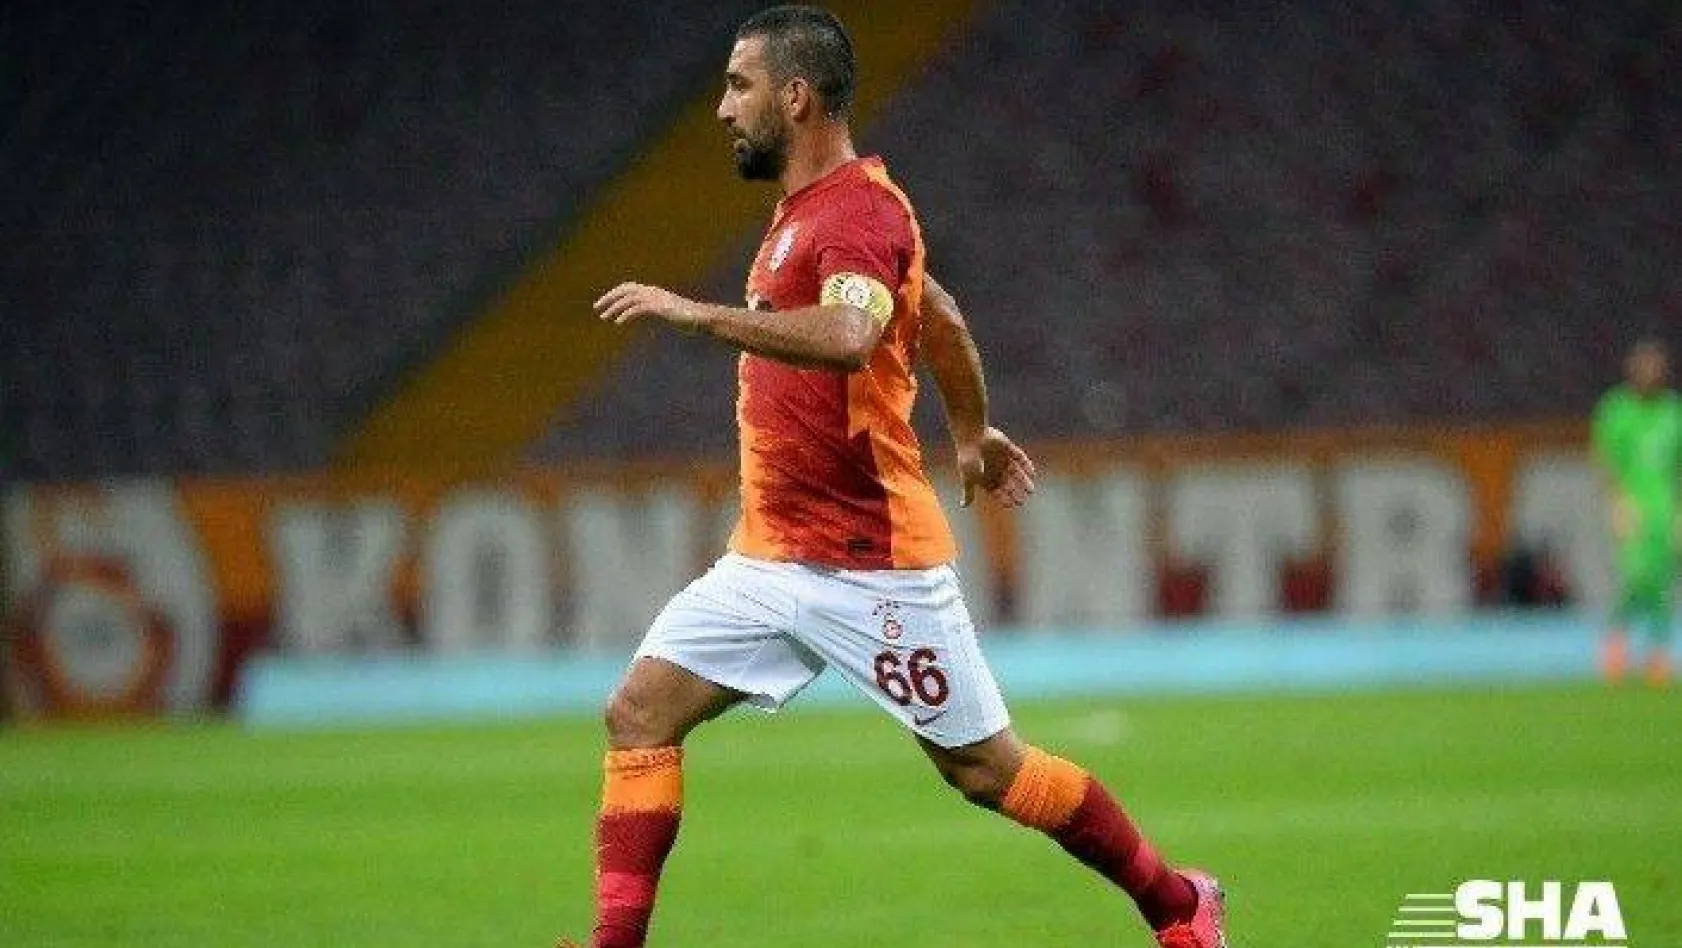 Arda Turan, 3 bin 403 gün sonra kaptan olarak Galatasaray formasıyla